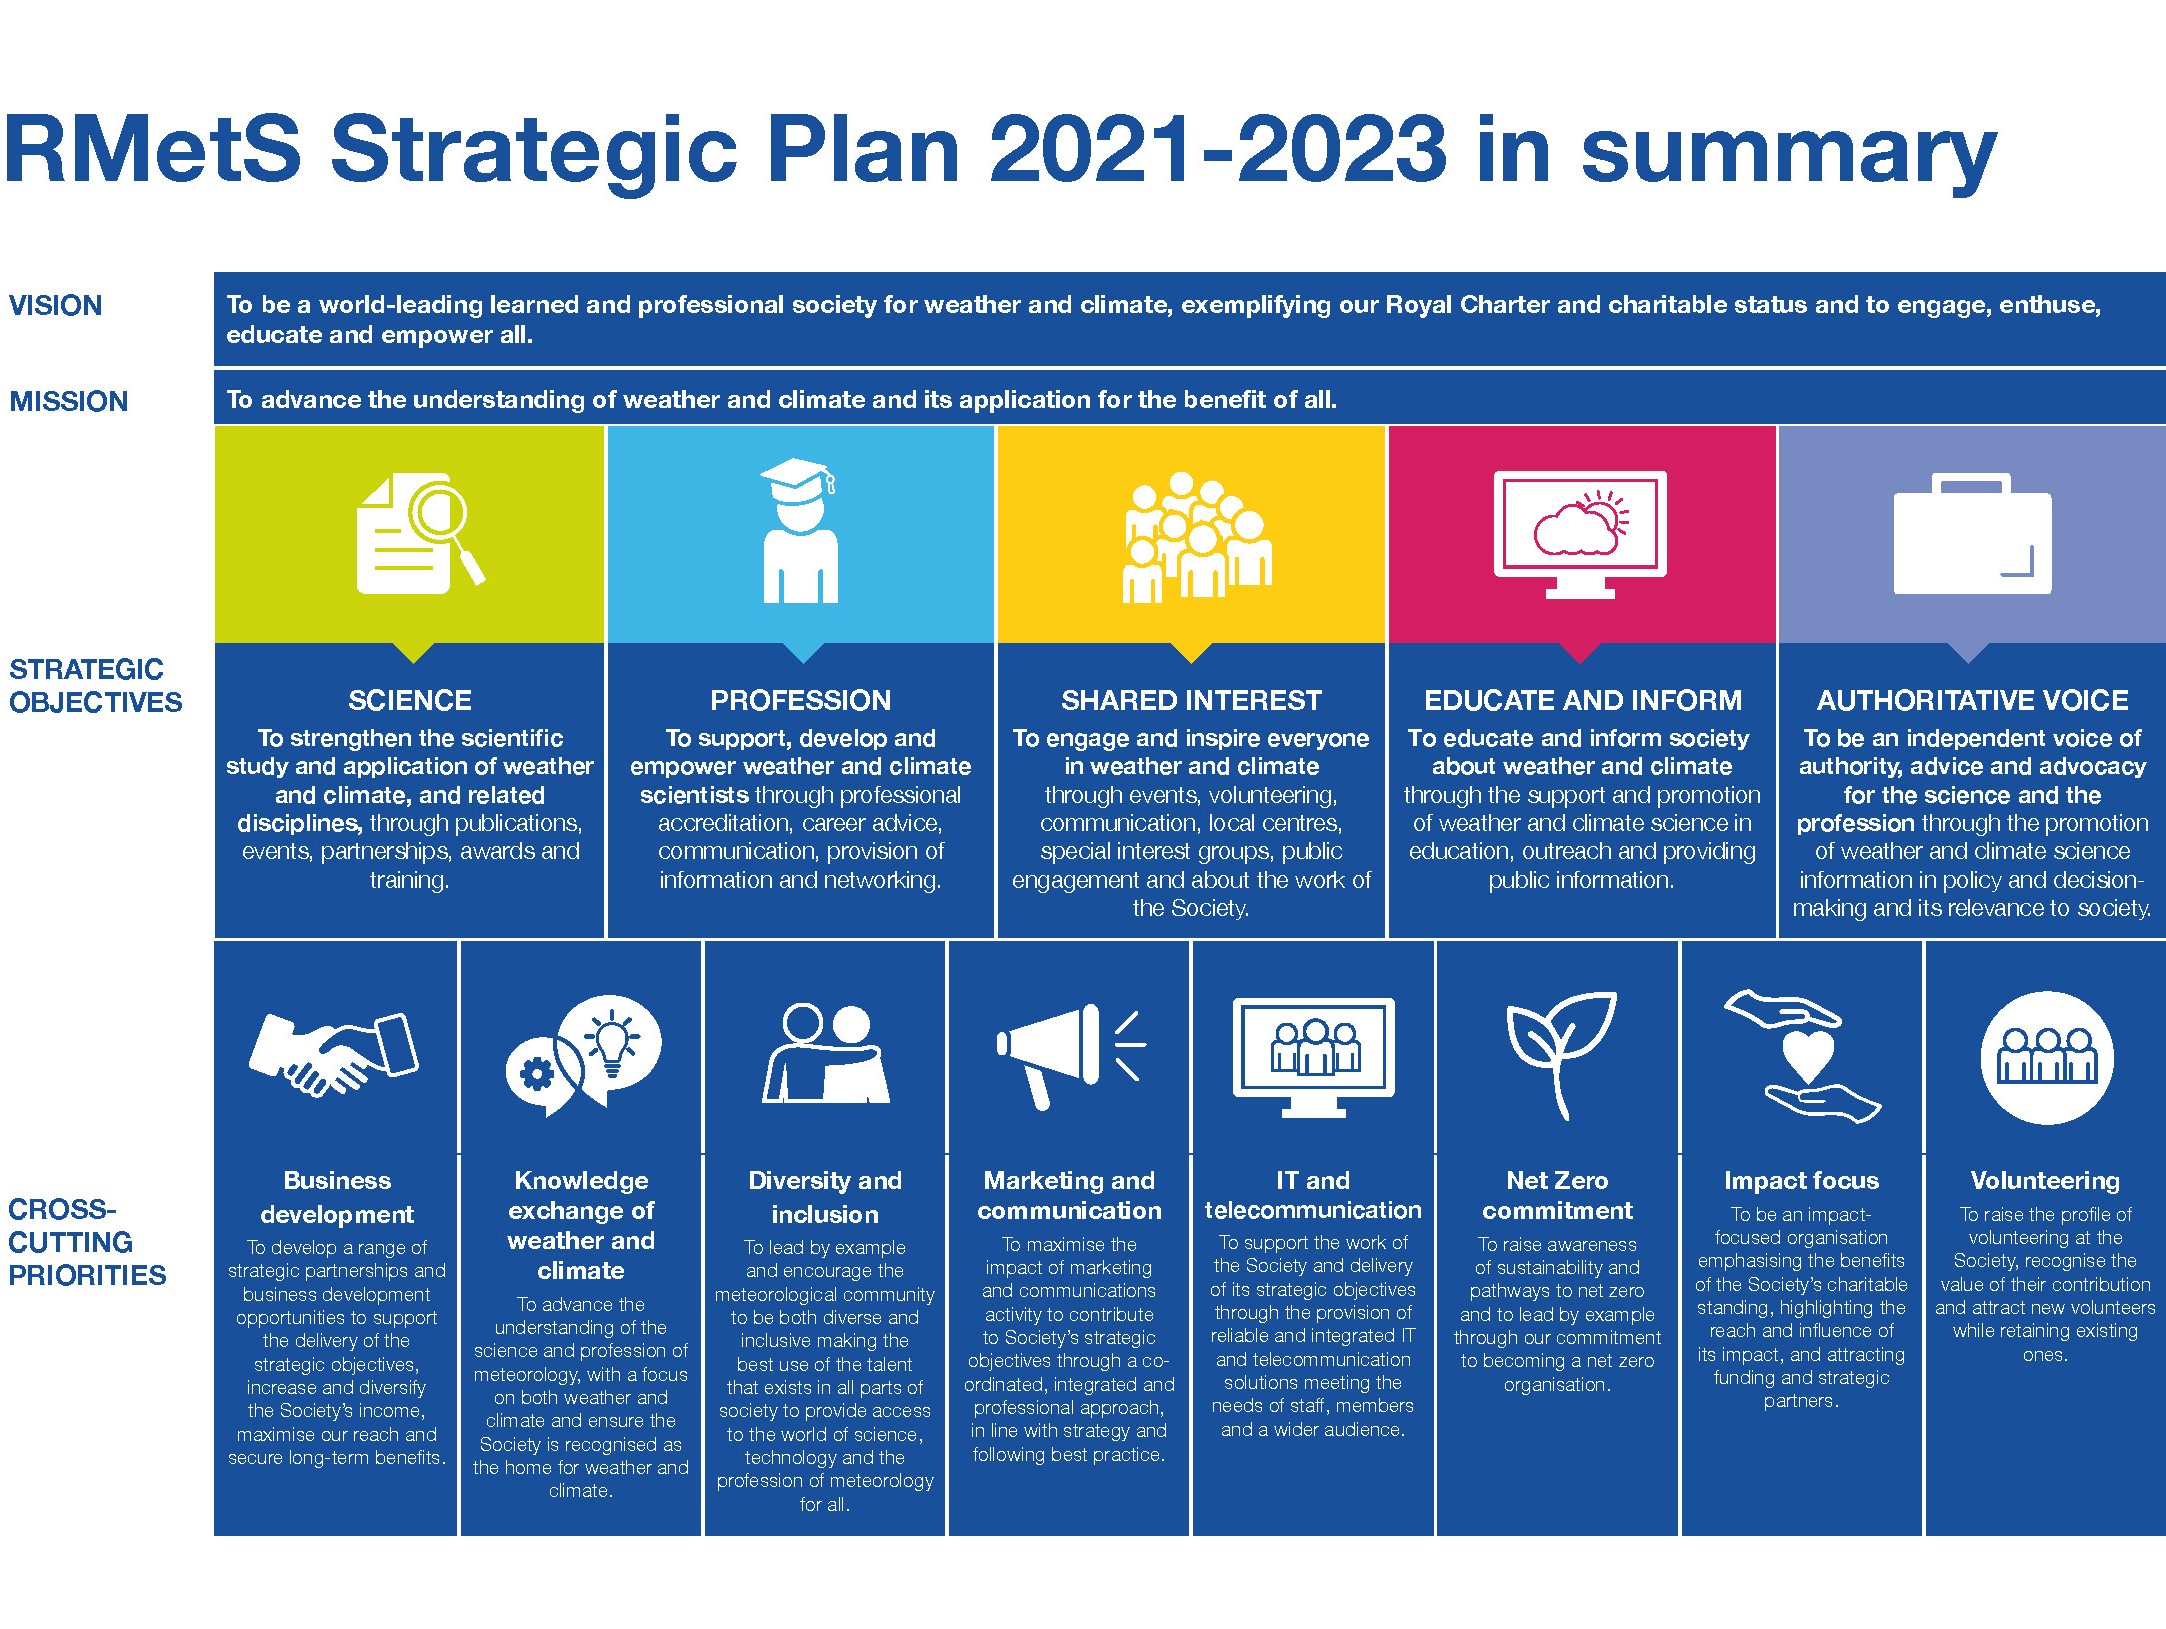 Strategic Plan summary graphic